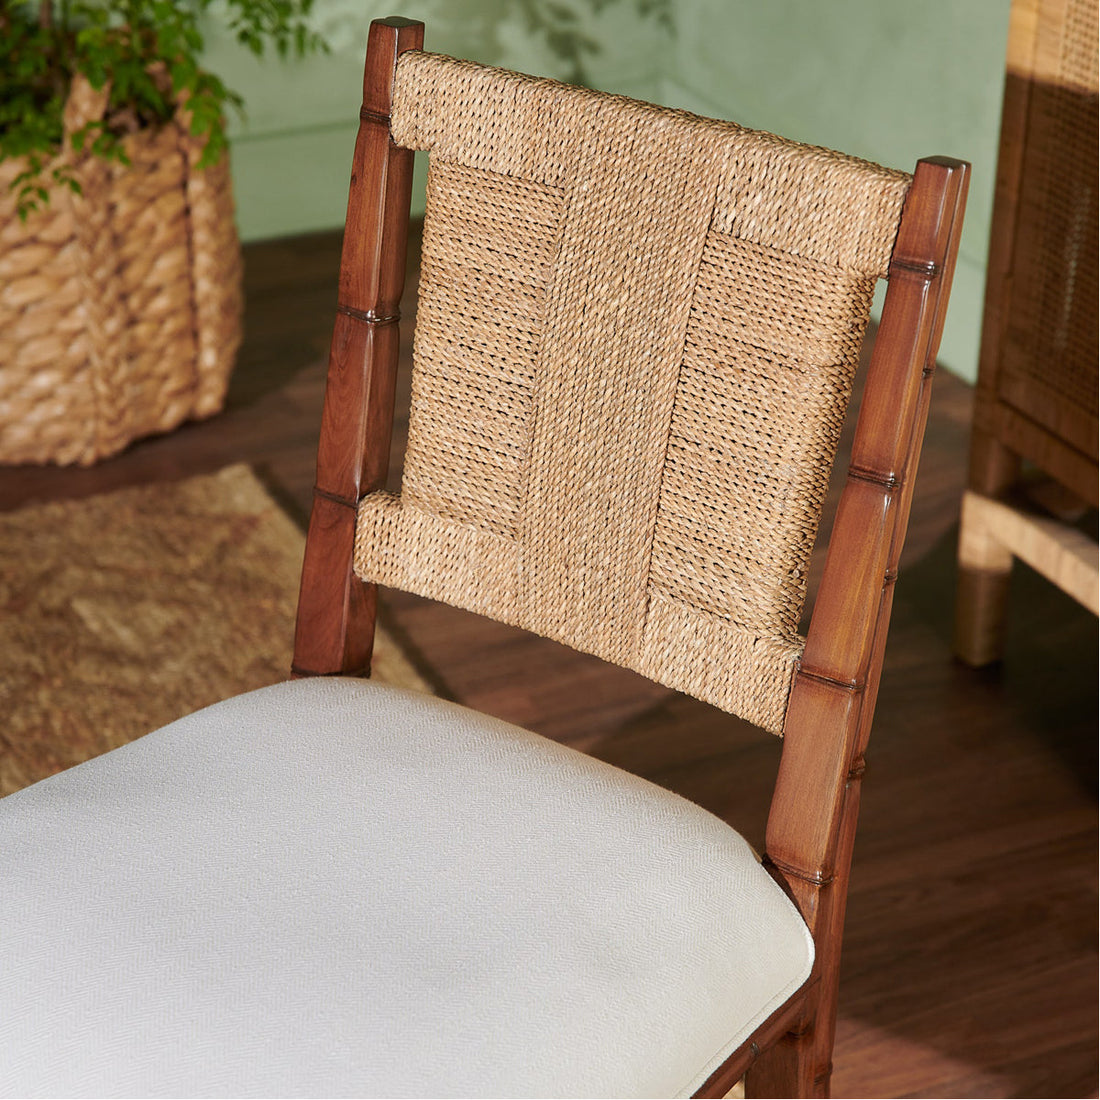 Made Goods Kiera Dining Chair in Alsek Fabric